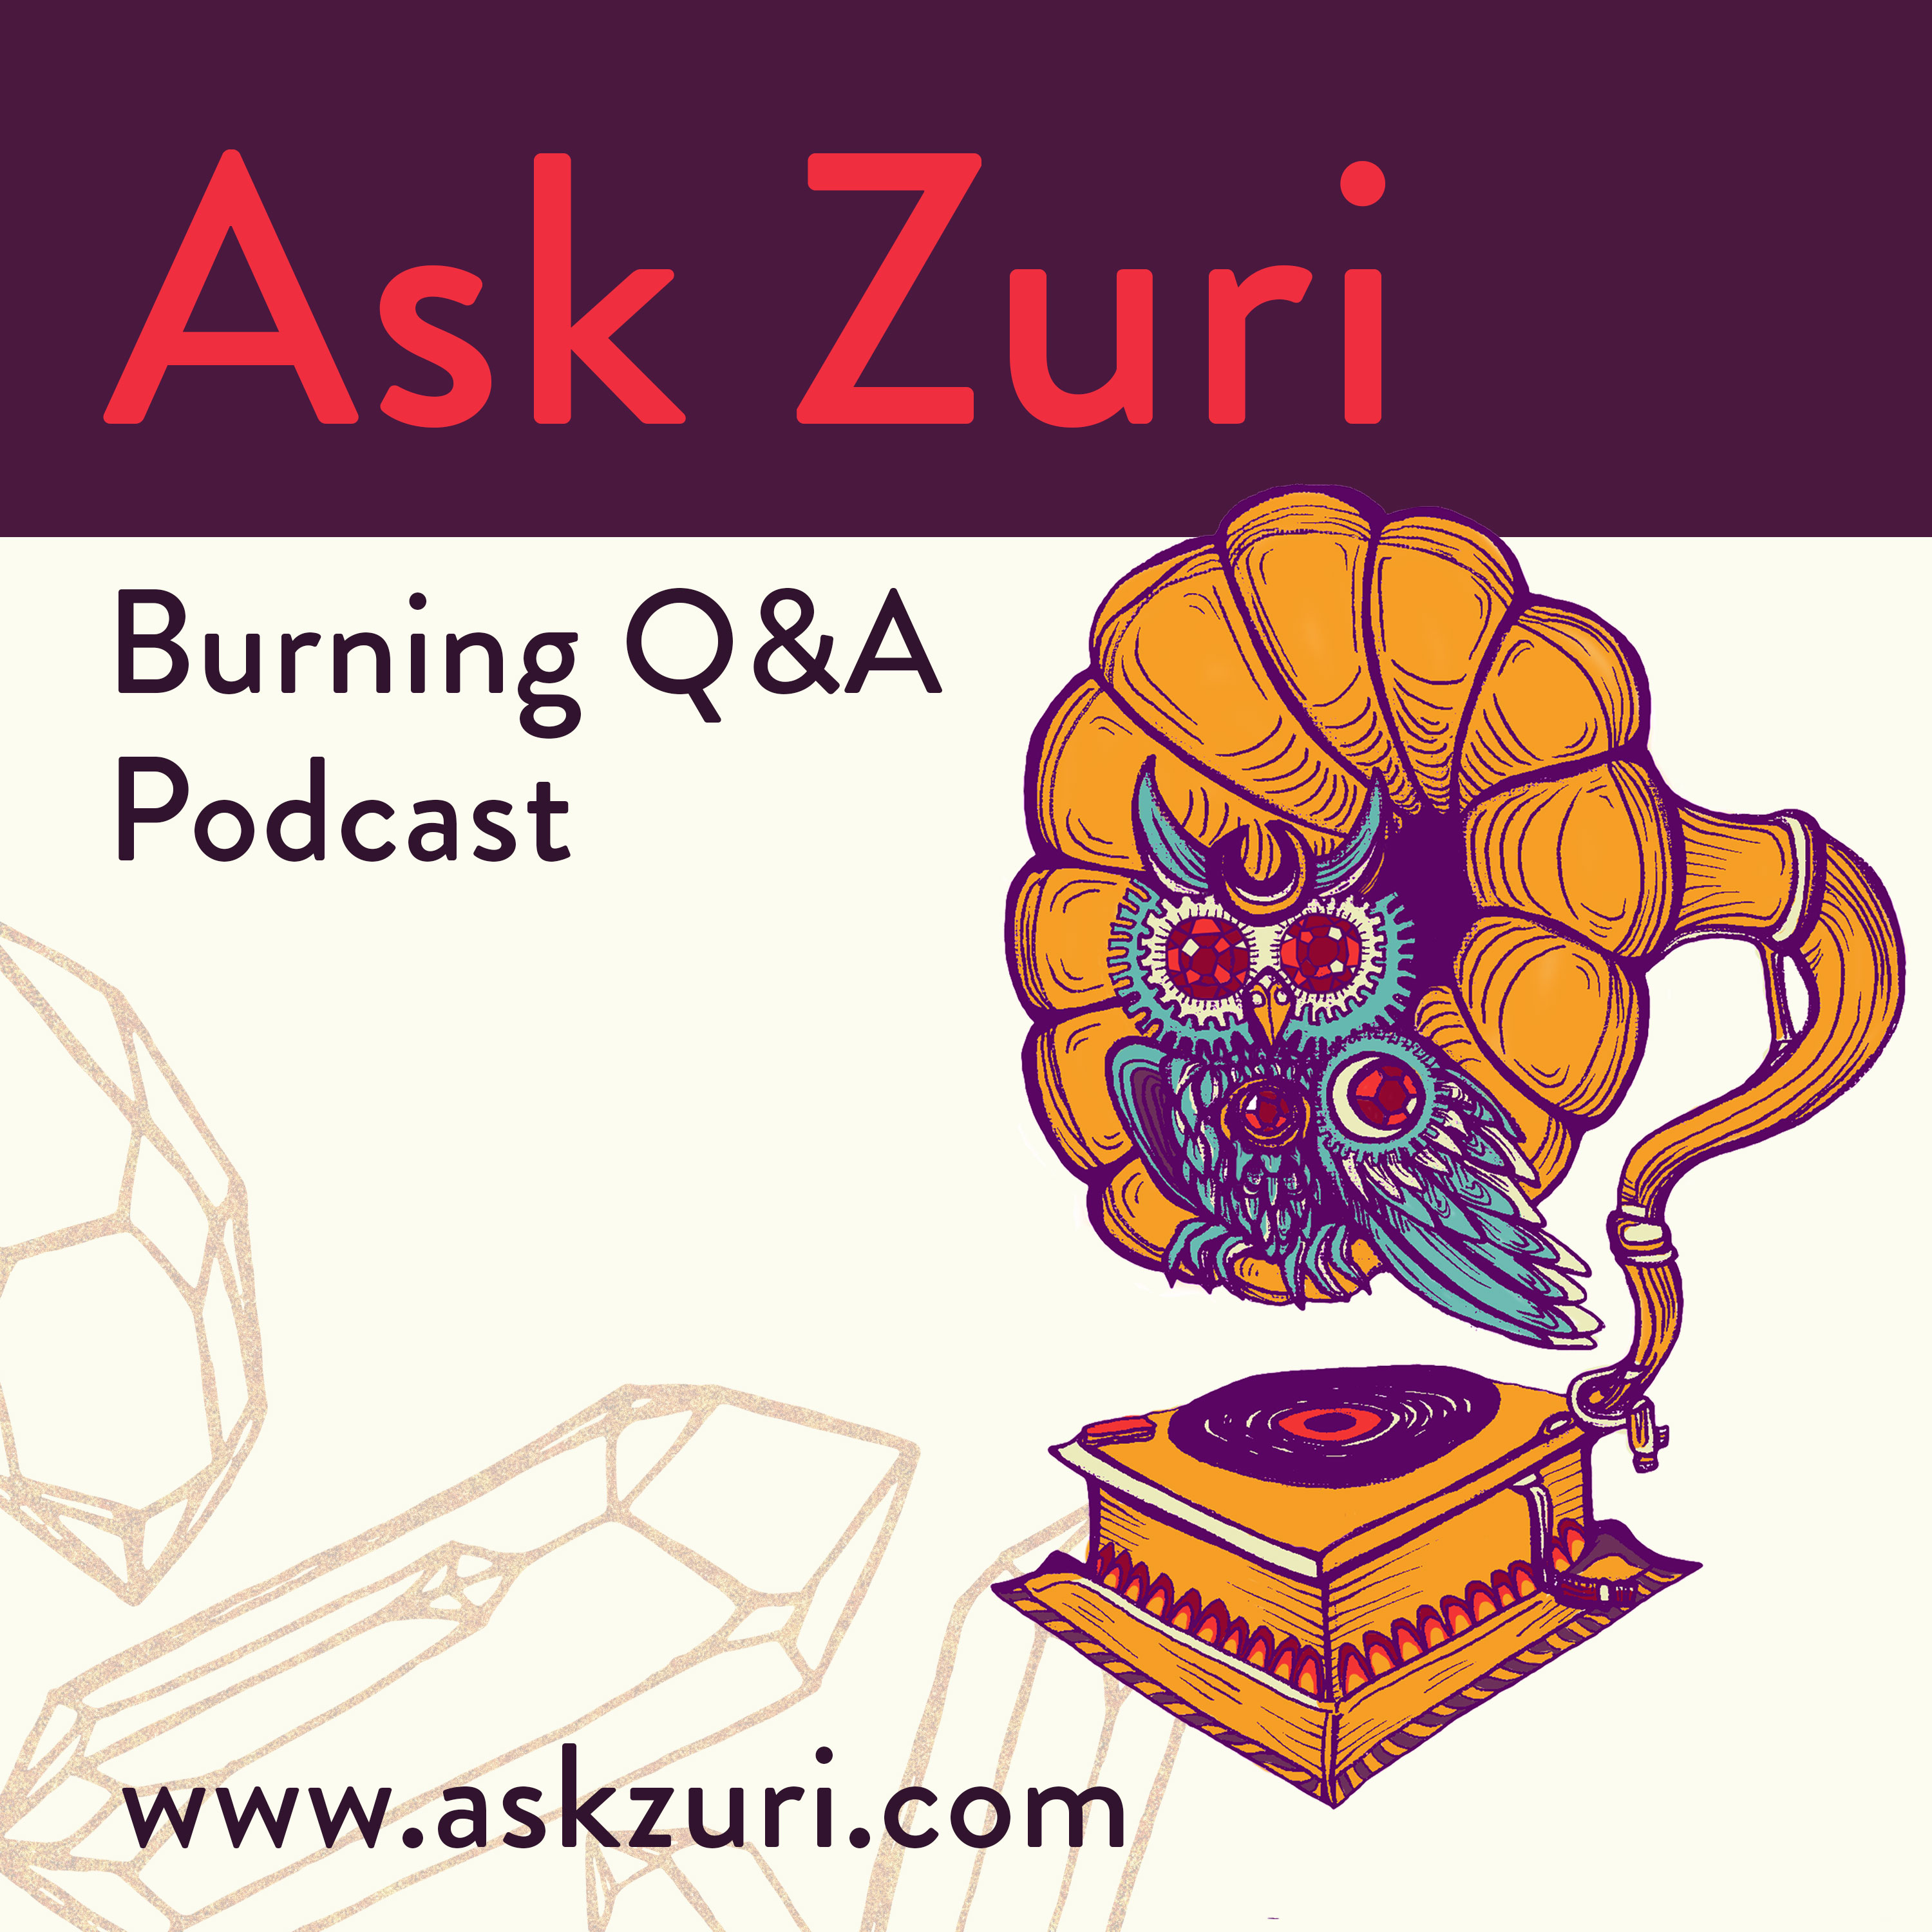 Ask Zuri Burning Q&A Podcast